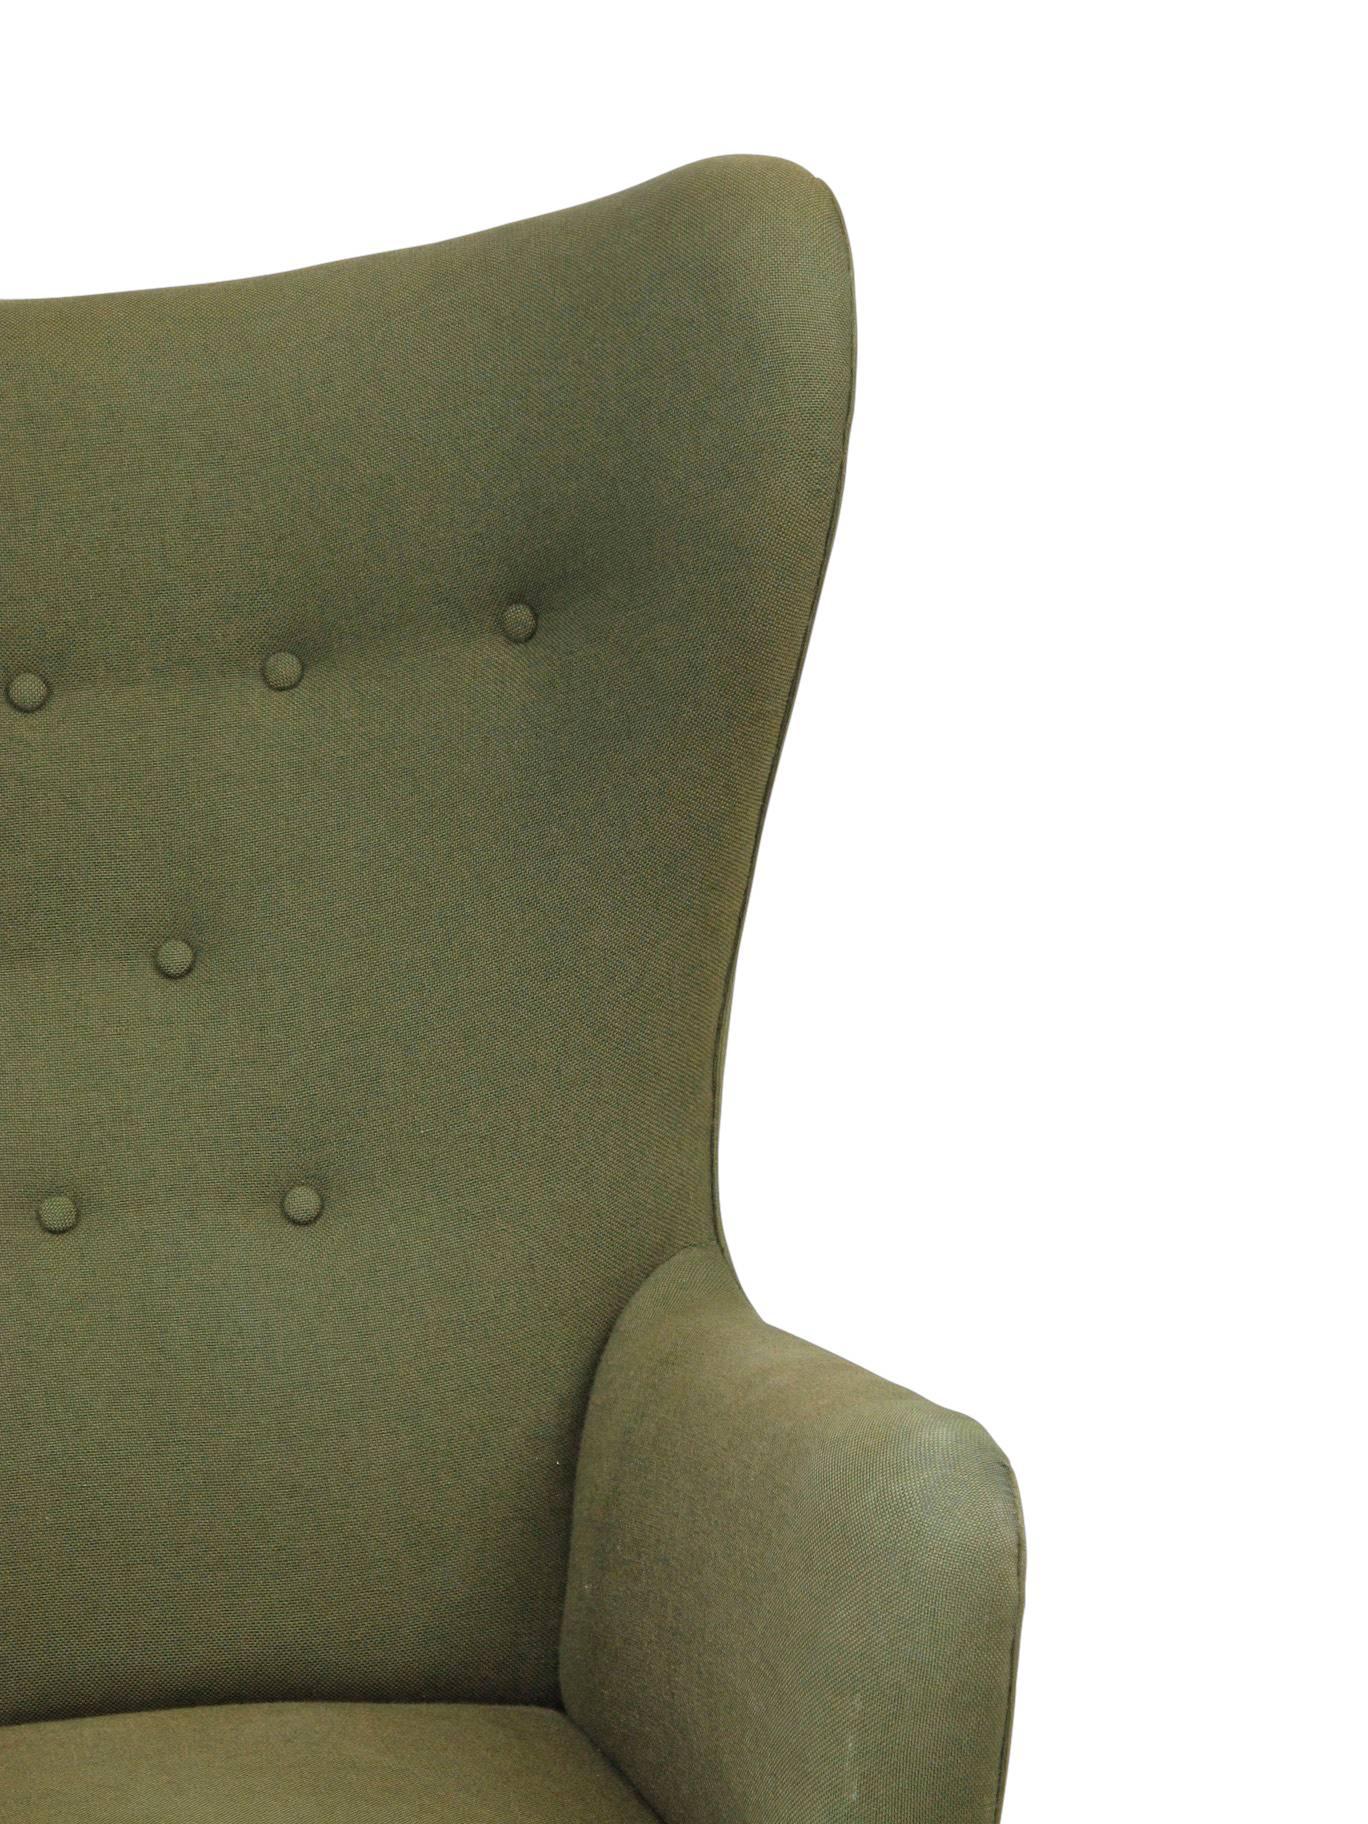 1942 Fritz Hansen Model 1672 Wing Back Chair in the Original Green Wool Fabric 1